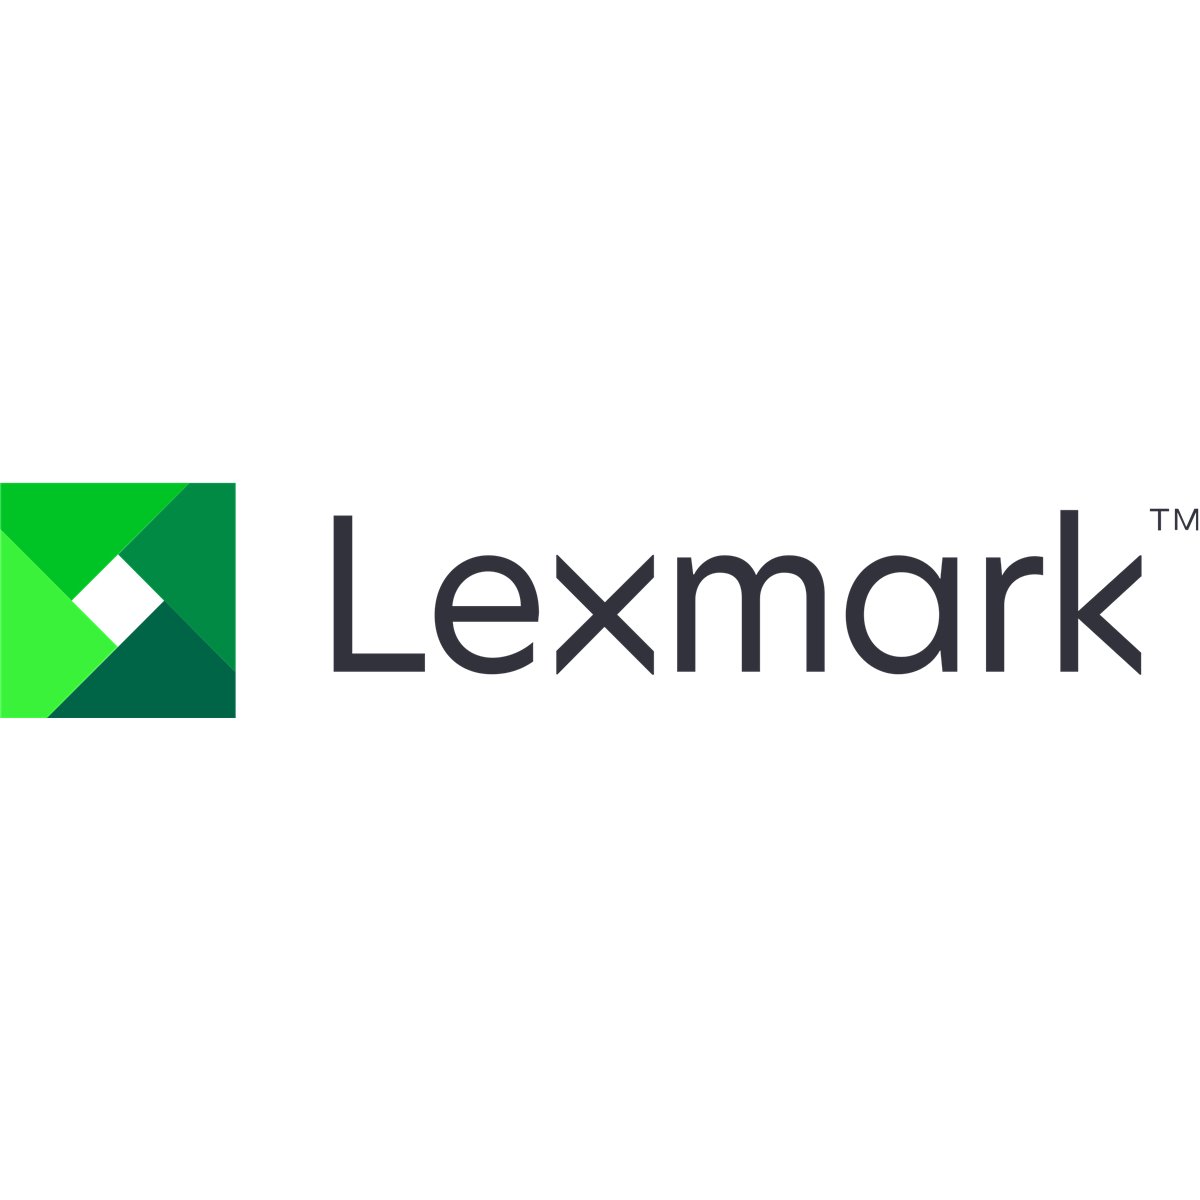 Lexmark Tray Insert ttm tray 3 media